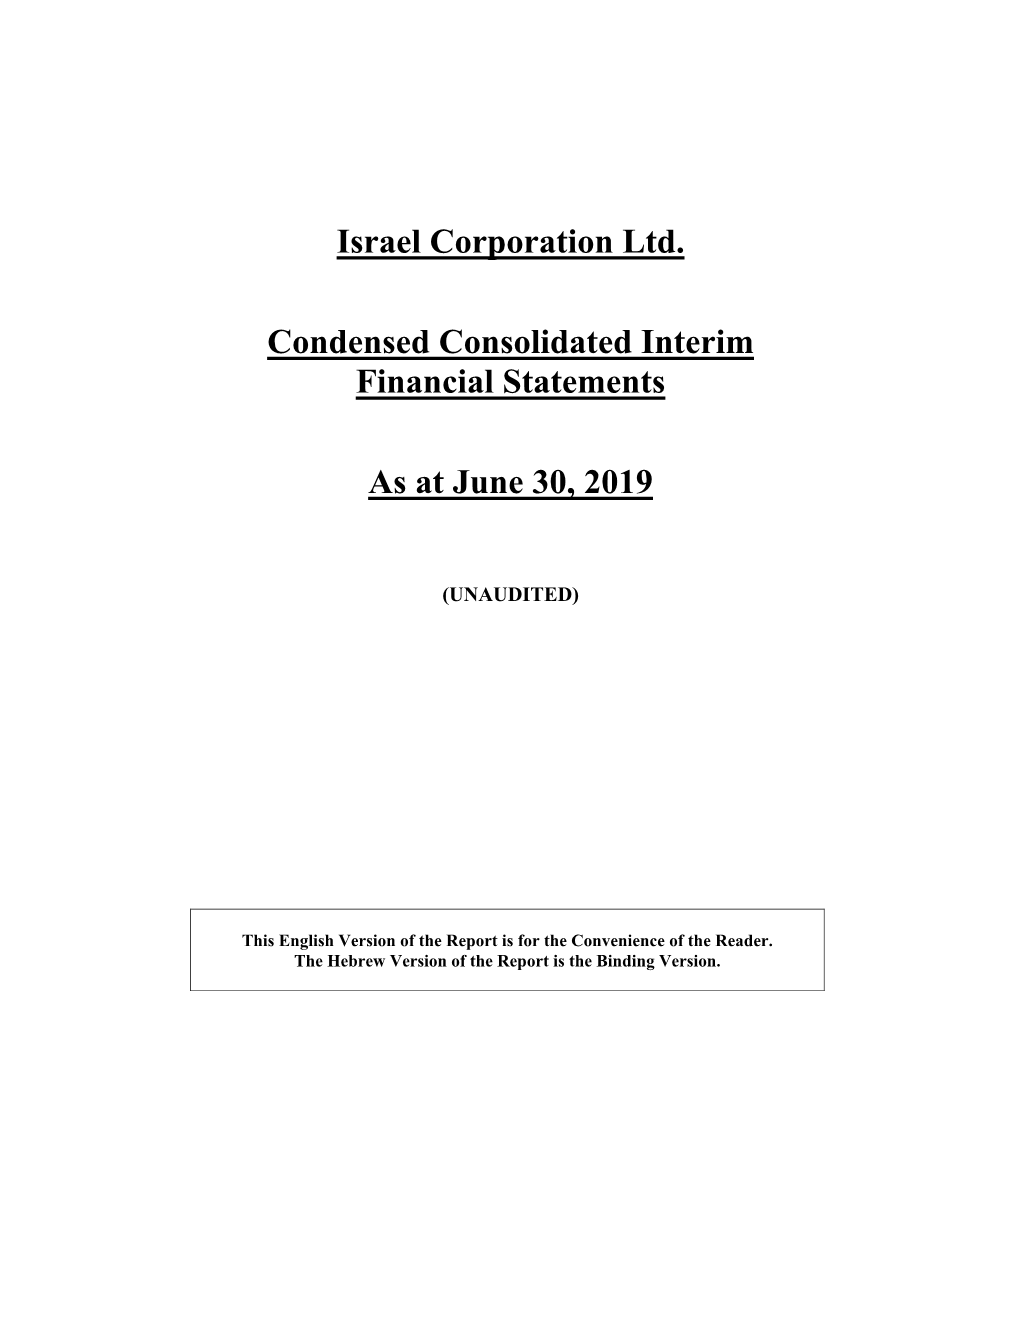 Israel Corporation Ltd. Condensed Consolidated Interim Financial Statements at June 30, 2019 Unaudited